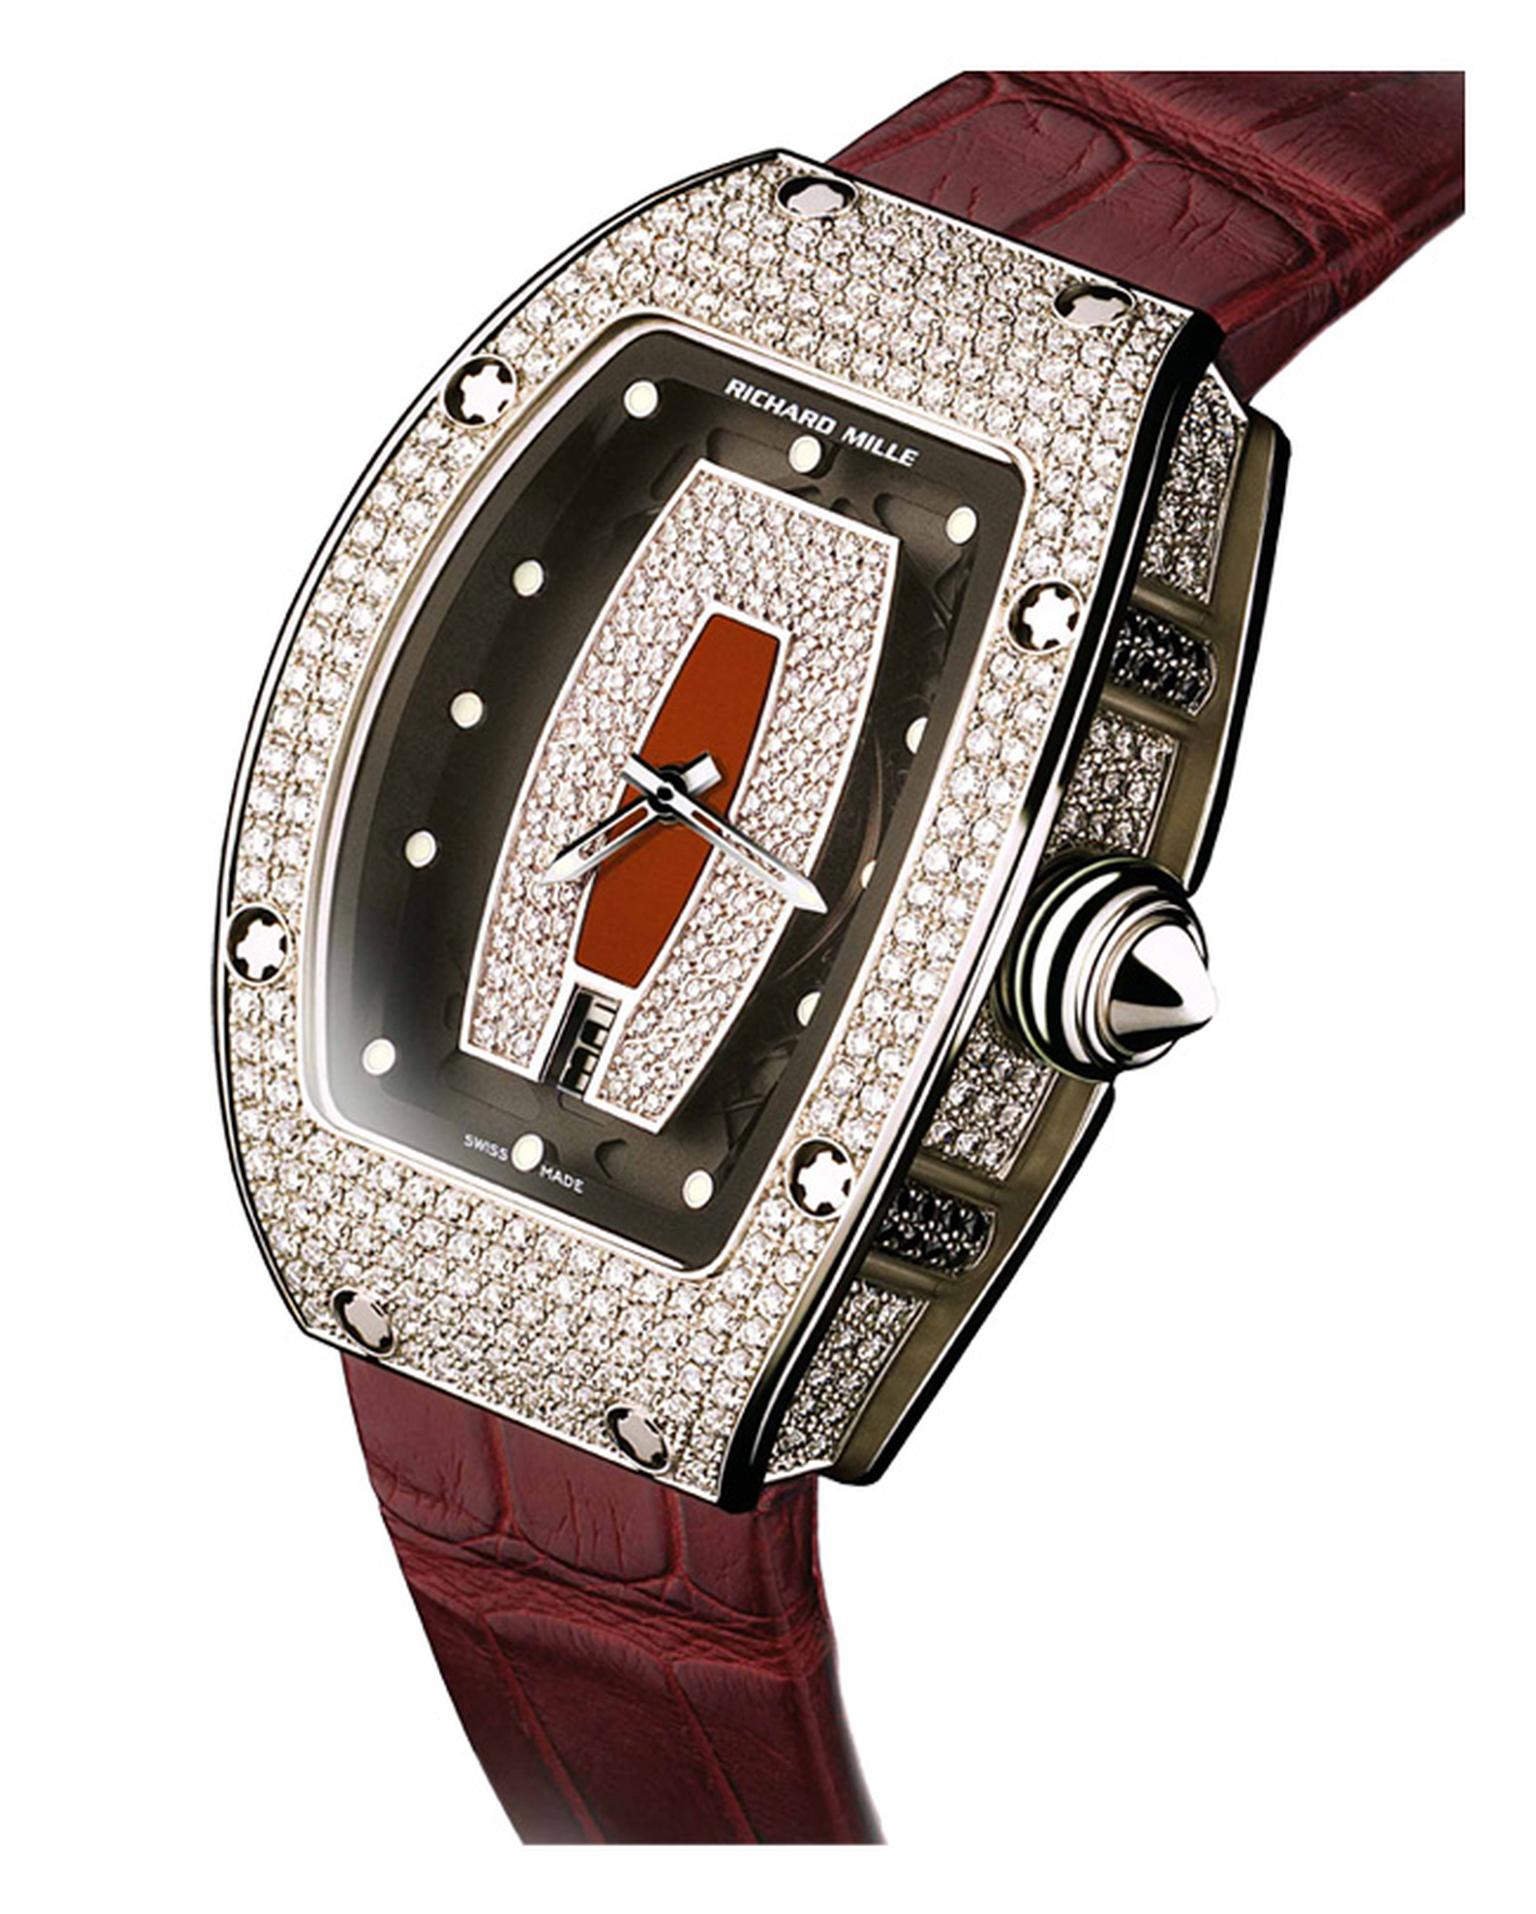 Richard Mille WG Diamond Cruncher FRONT HiRes Watch_20130927_Main